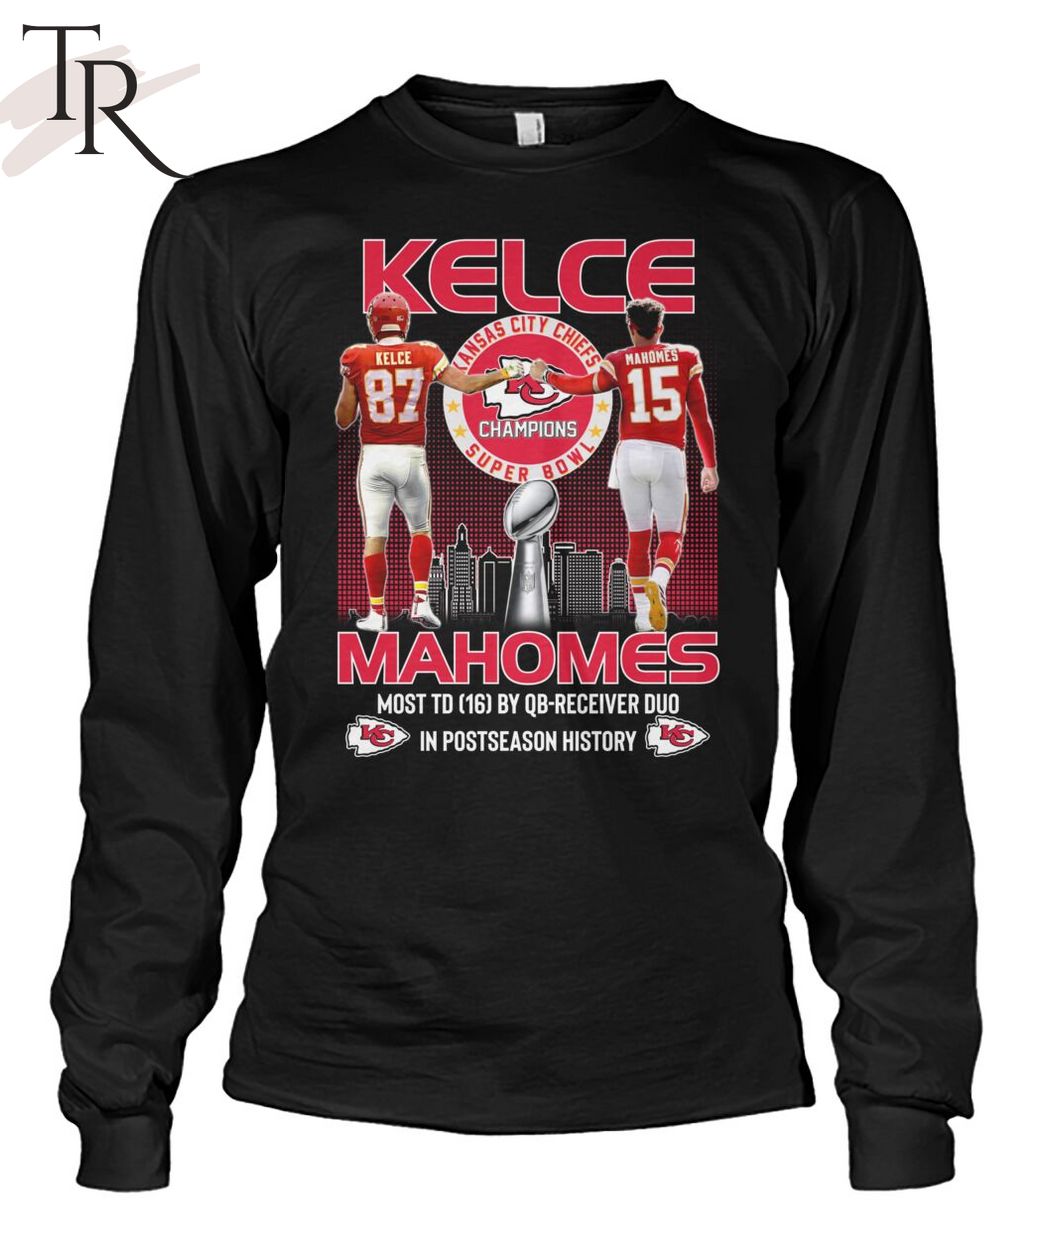 Kansas City Chiefs Super Bowl Champions Kelce Mahomes Most TD 16 By Qb-Receiver Duo In Postseason History T-Shirt